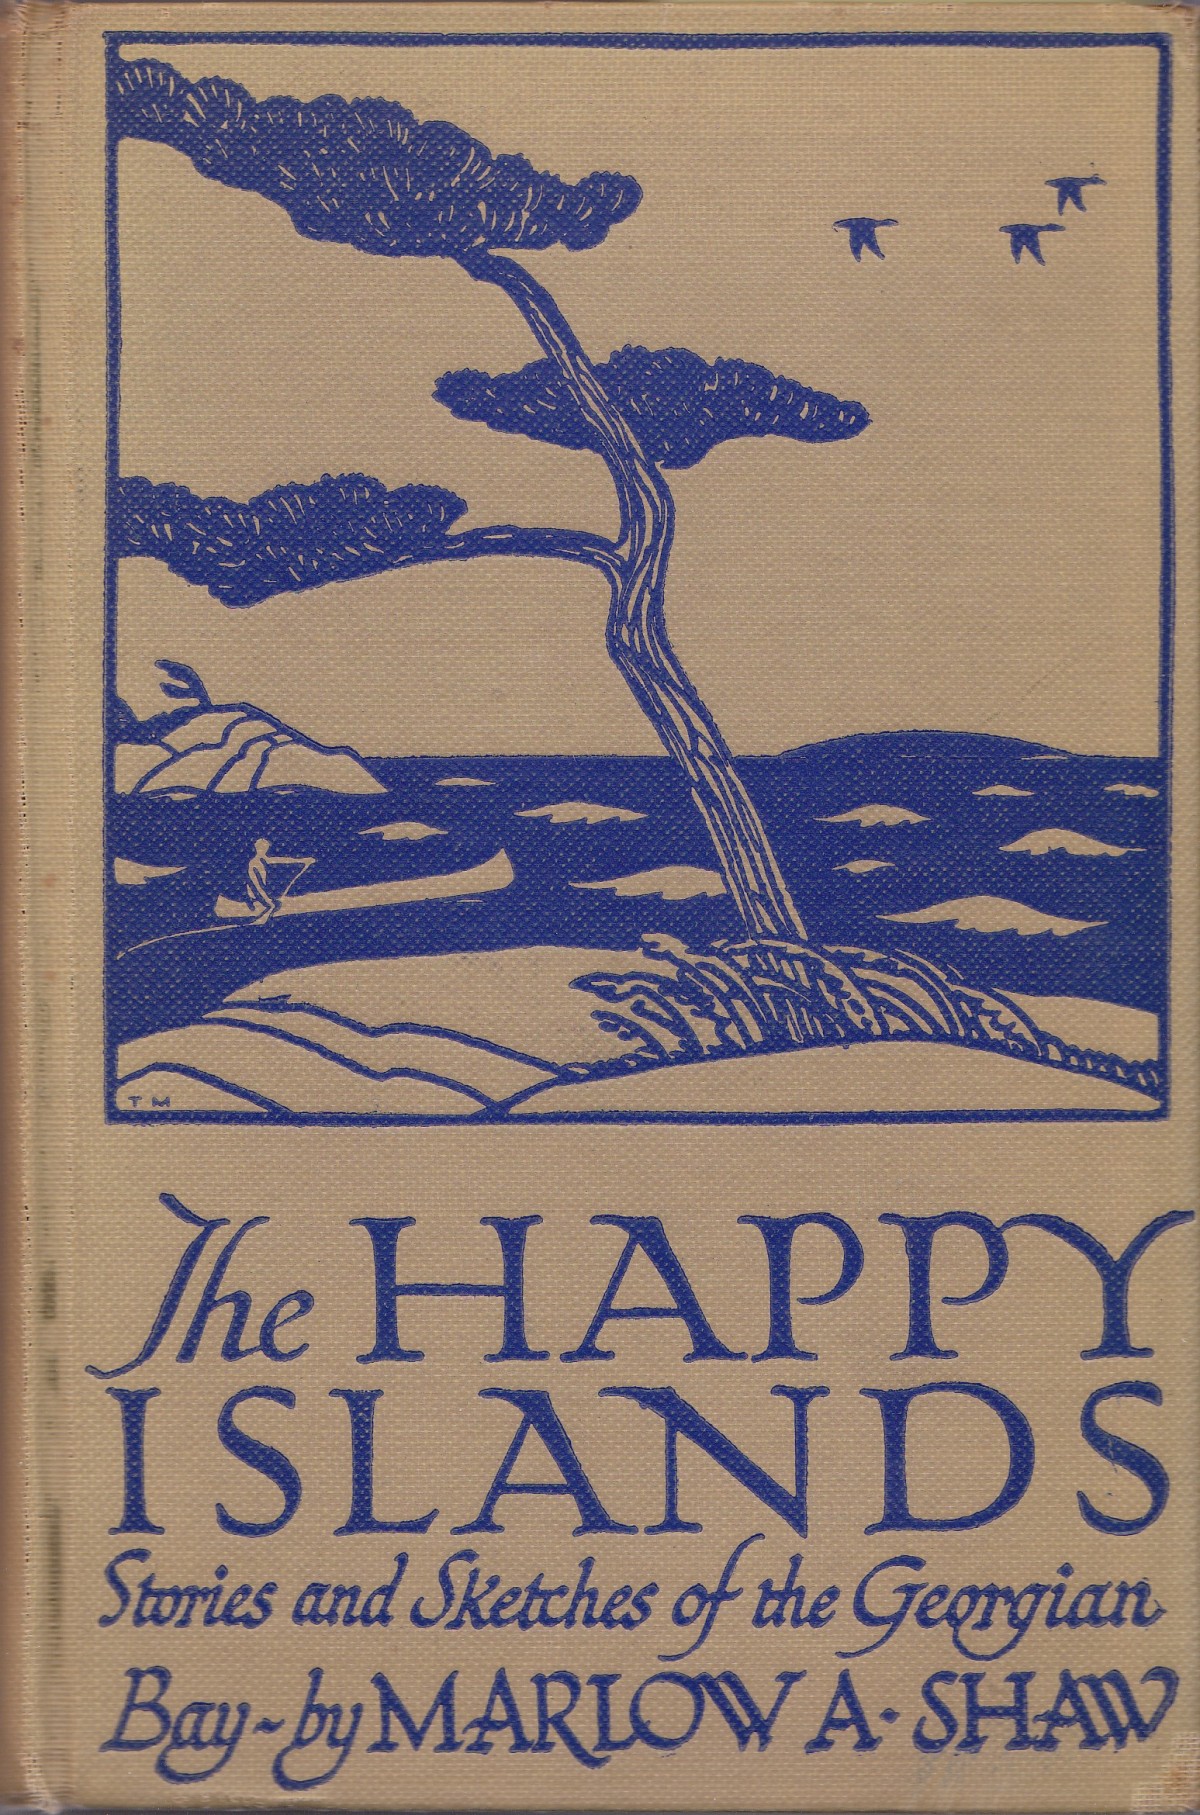 The islands were happy, even  a century ago